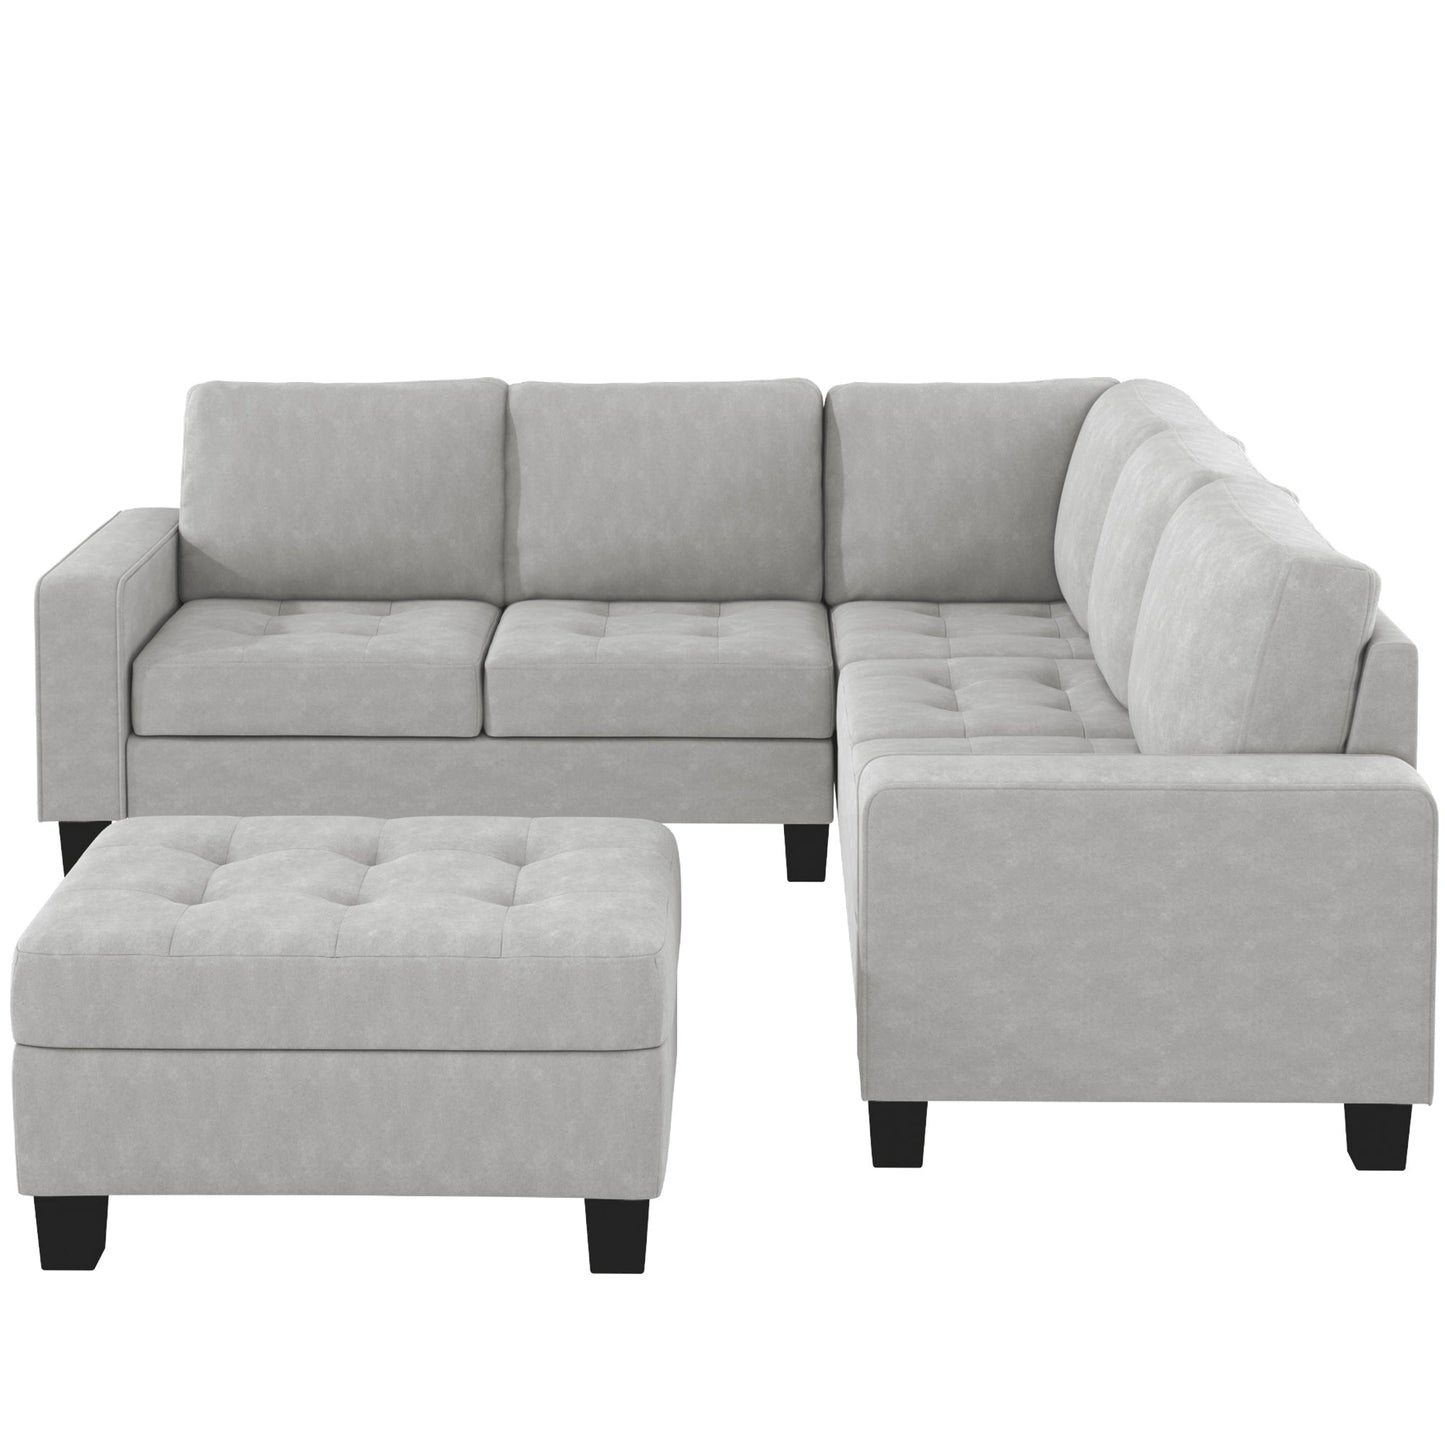 Brianna L Shape Sectional Corner Sofa, Space Saving with Storage Ottoman, Light Grey